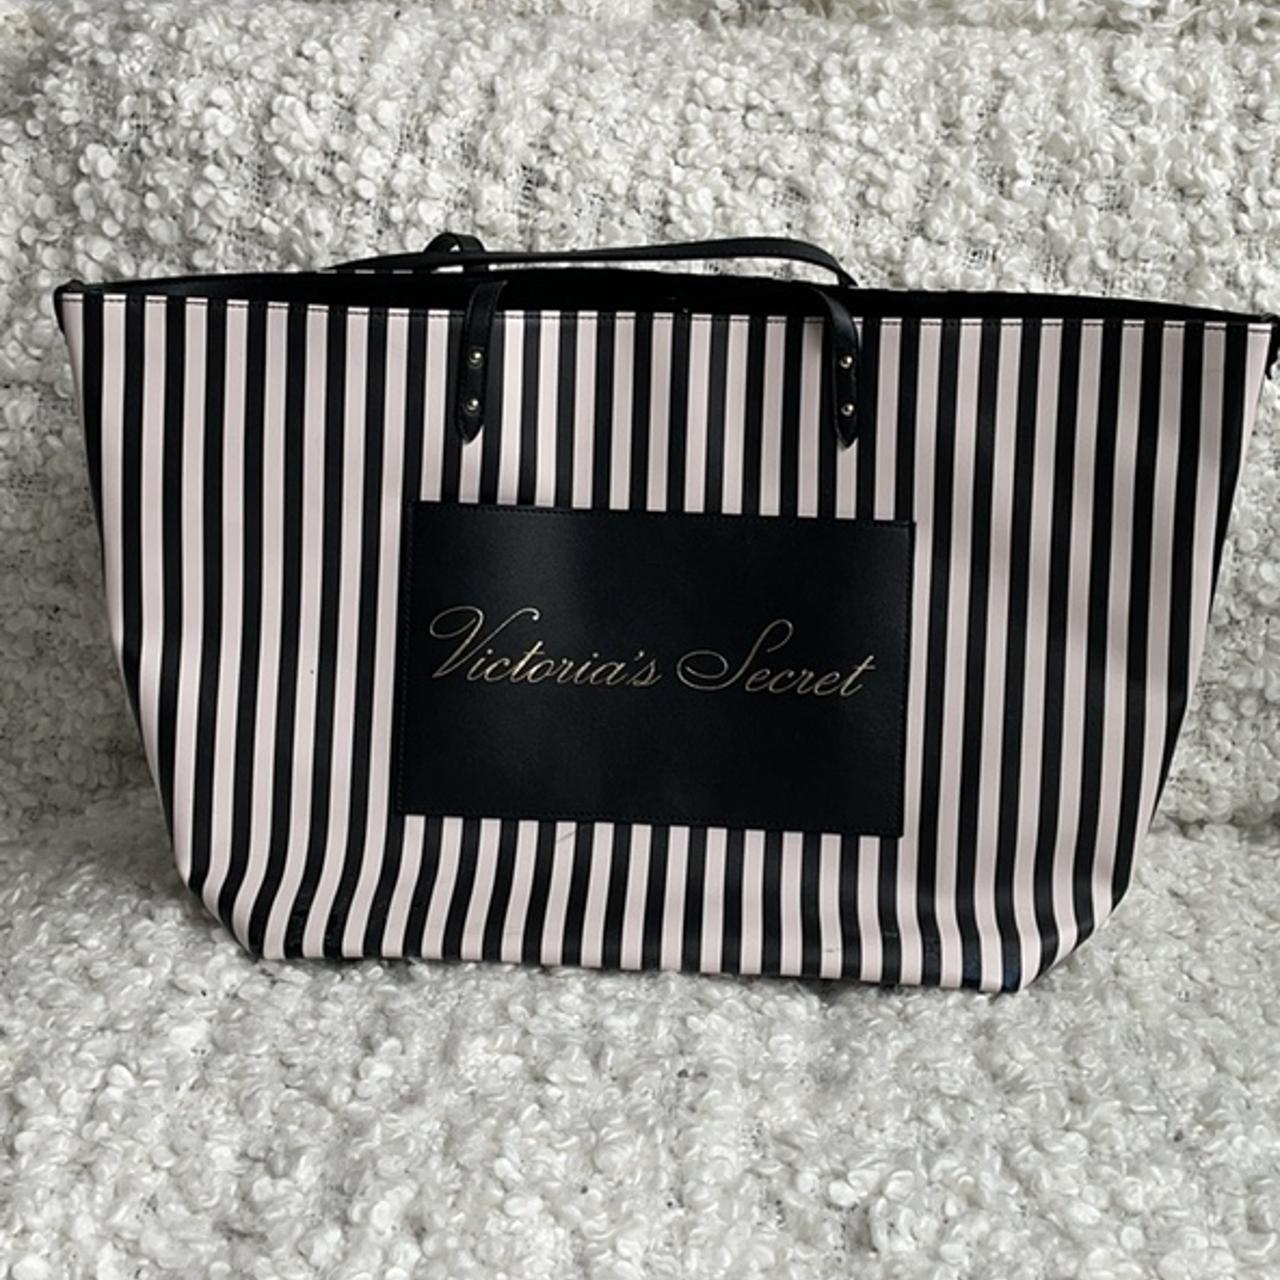 Victoria's secret bag real vs fake. How to spot fake Victoria's